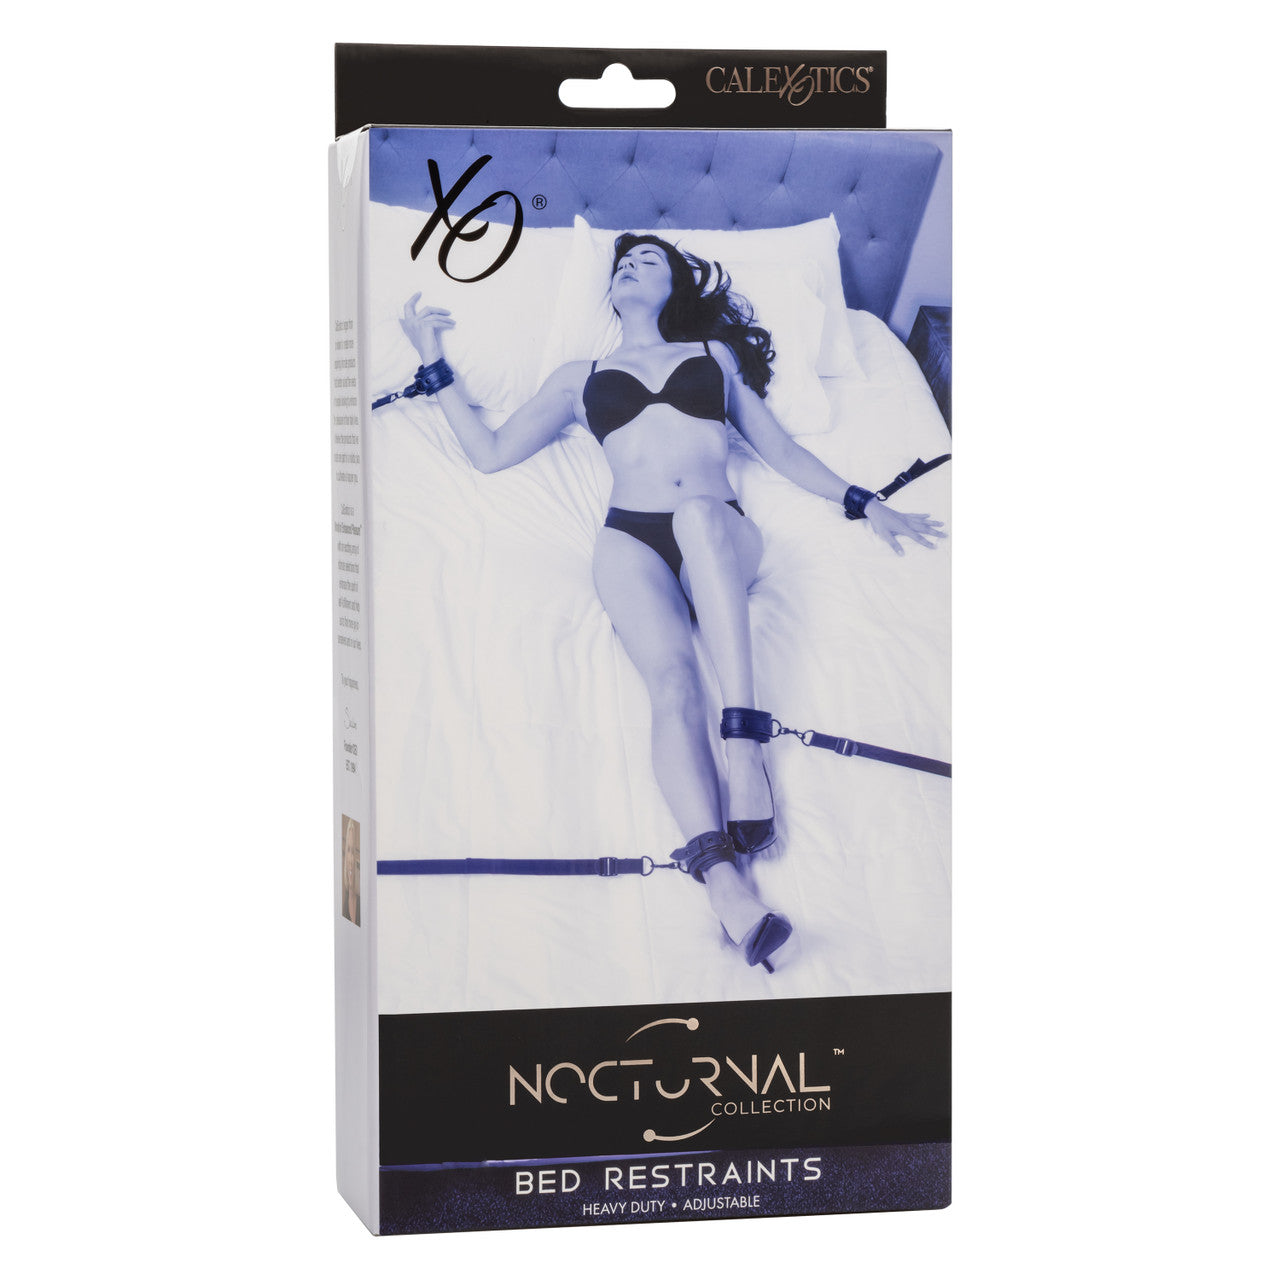 CalExotics Nocturnal Collection Bed Restraints